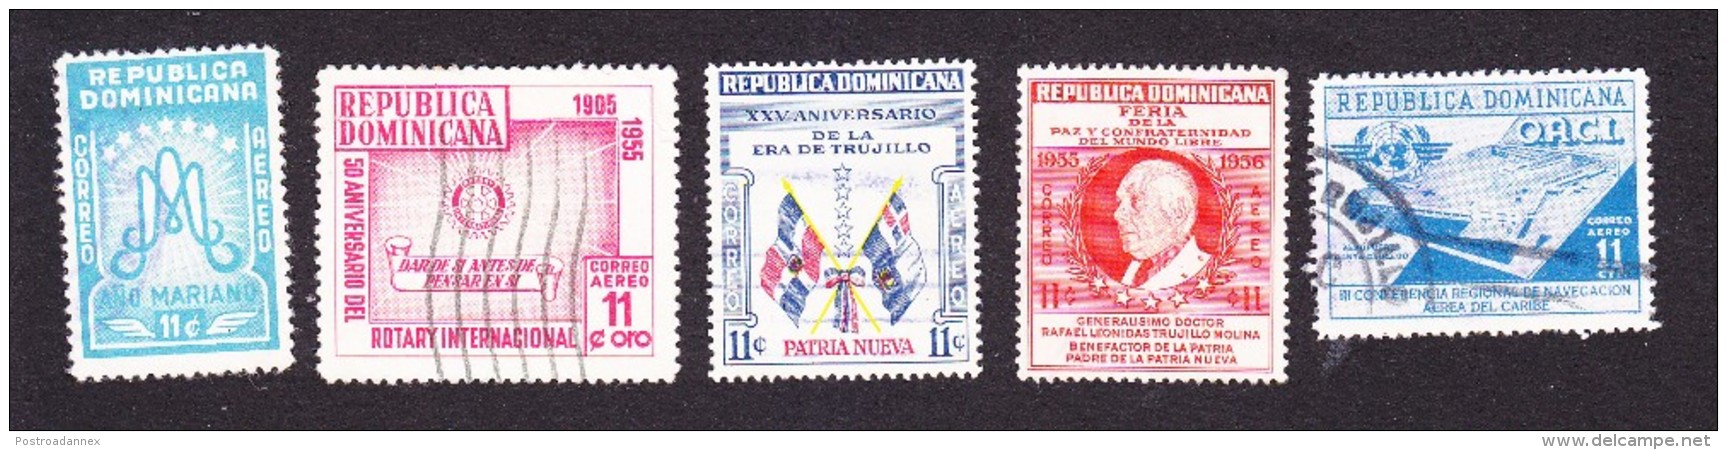 Dominican Republic, Scott #C88, C90-C91, C94-C95, Used, Ano Mariano, Rotary, Flags, Fair, ICAO, Issued 1954-56 - Dominicaine (République)